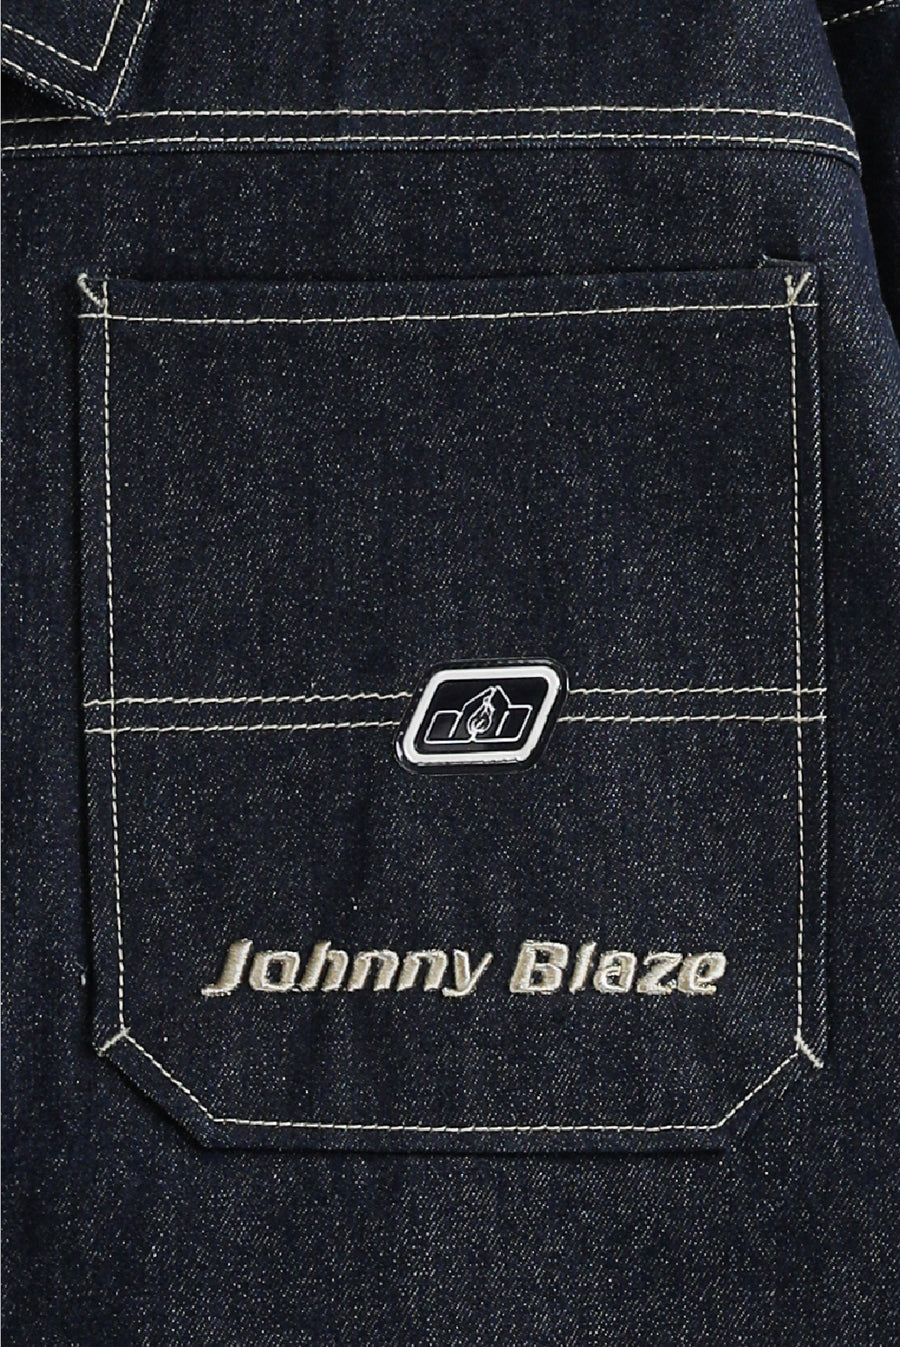 Deadstock Johnny Blaze Denim Jacket